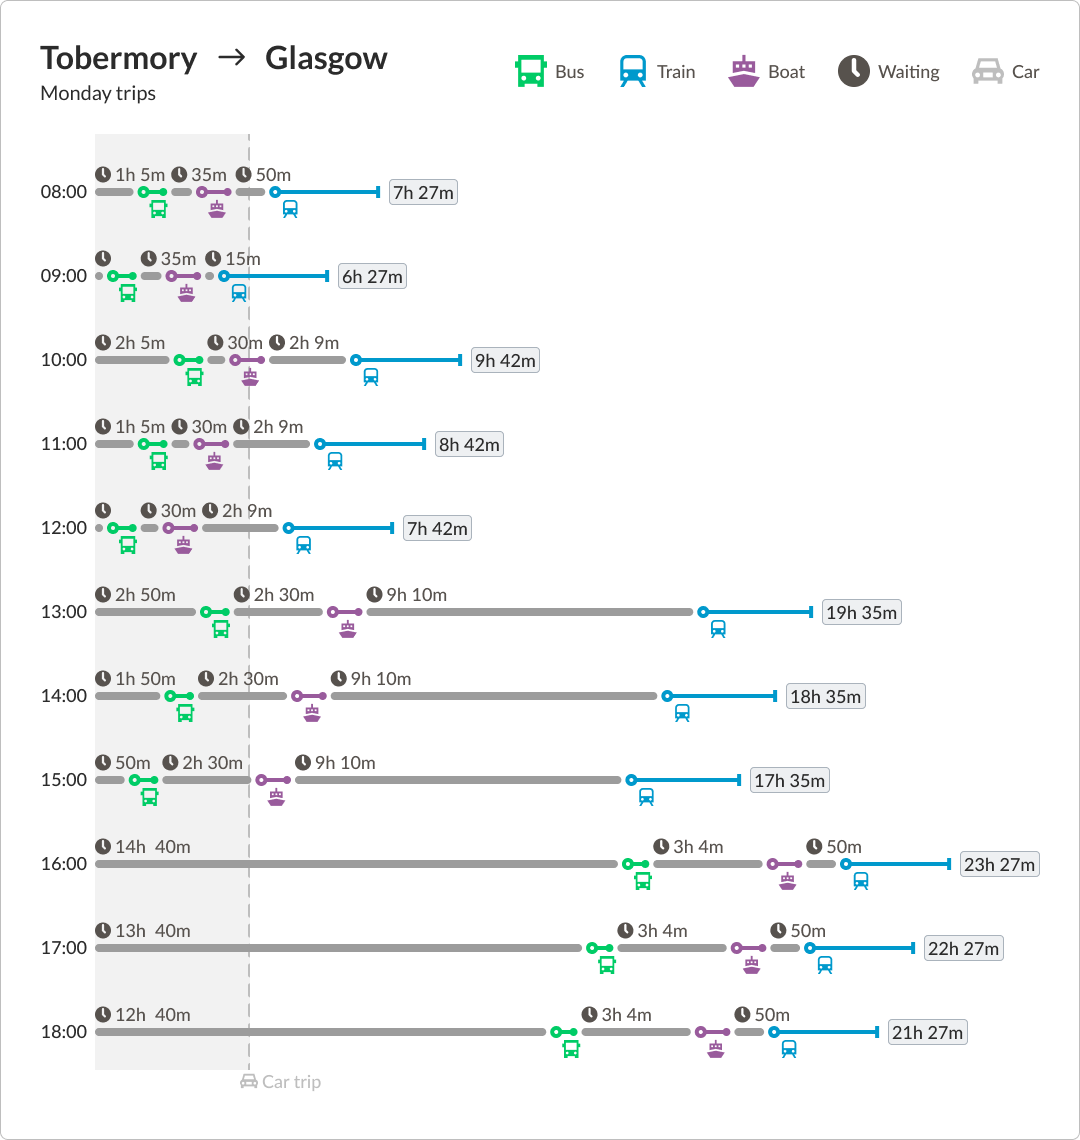 Tobermory-Glasgow Monday schedule